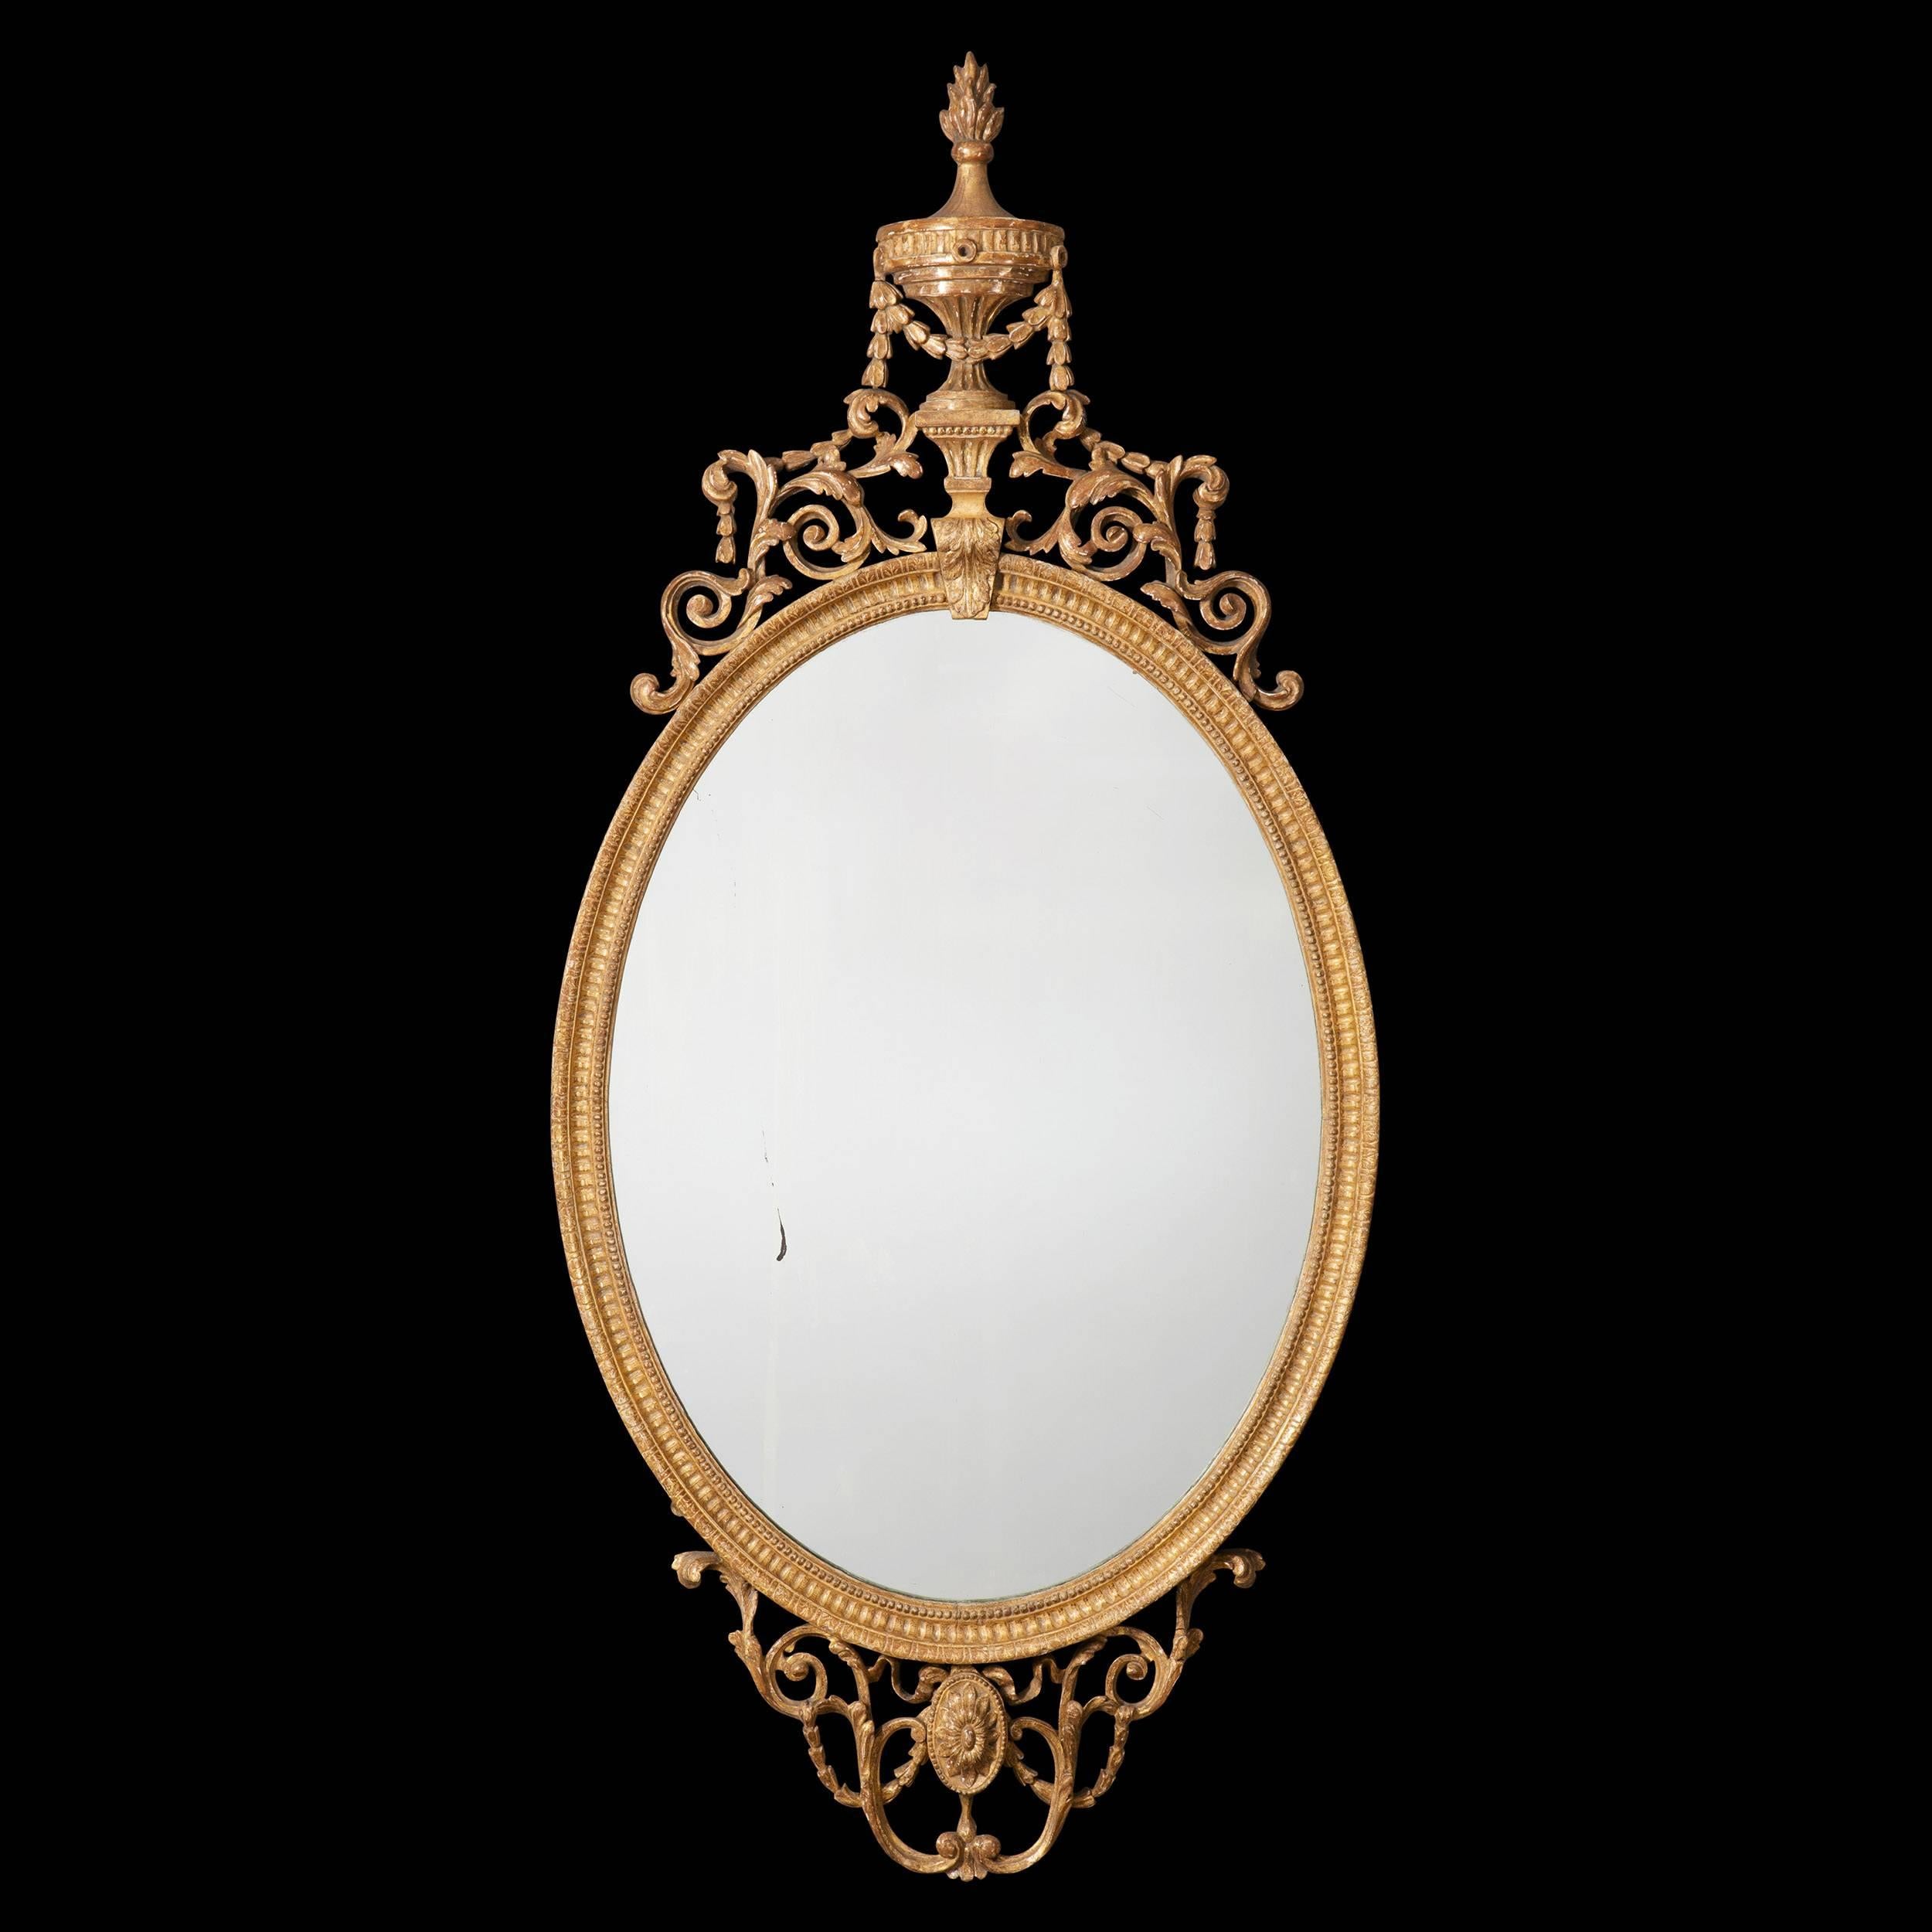 A George III oval mirror